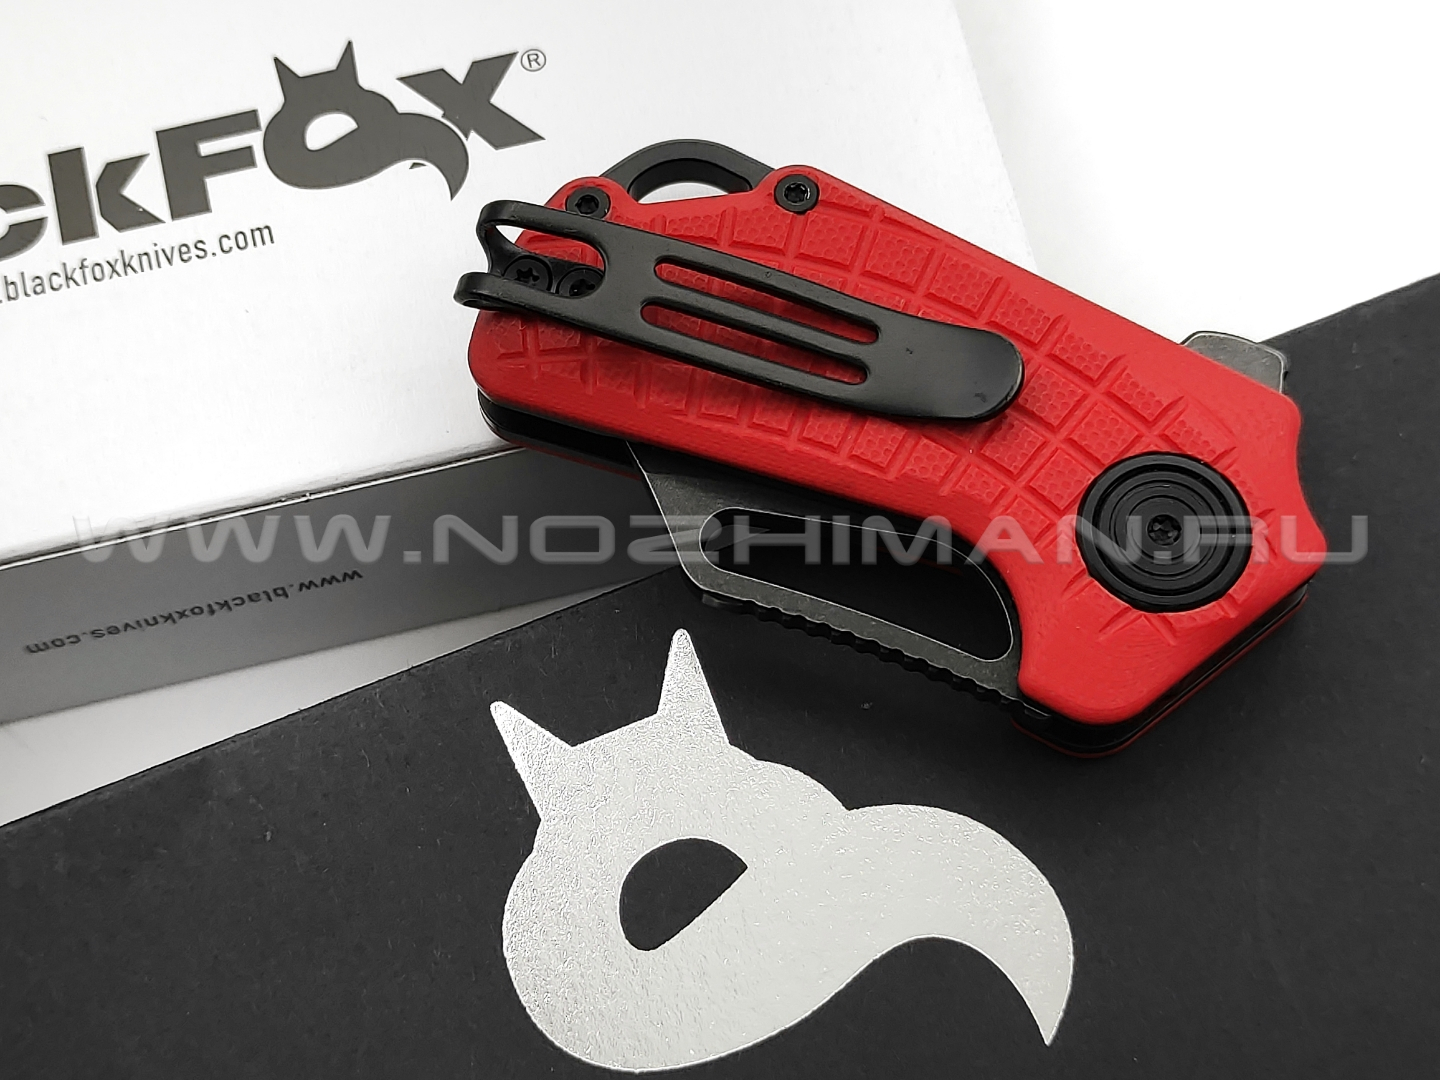 Нож BlackFox Puck BF-761 R сталь D2 blackwash, рукоять G10 red